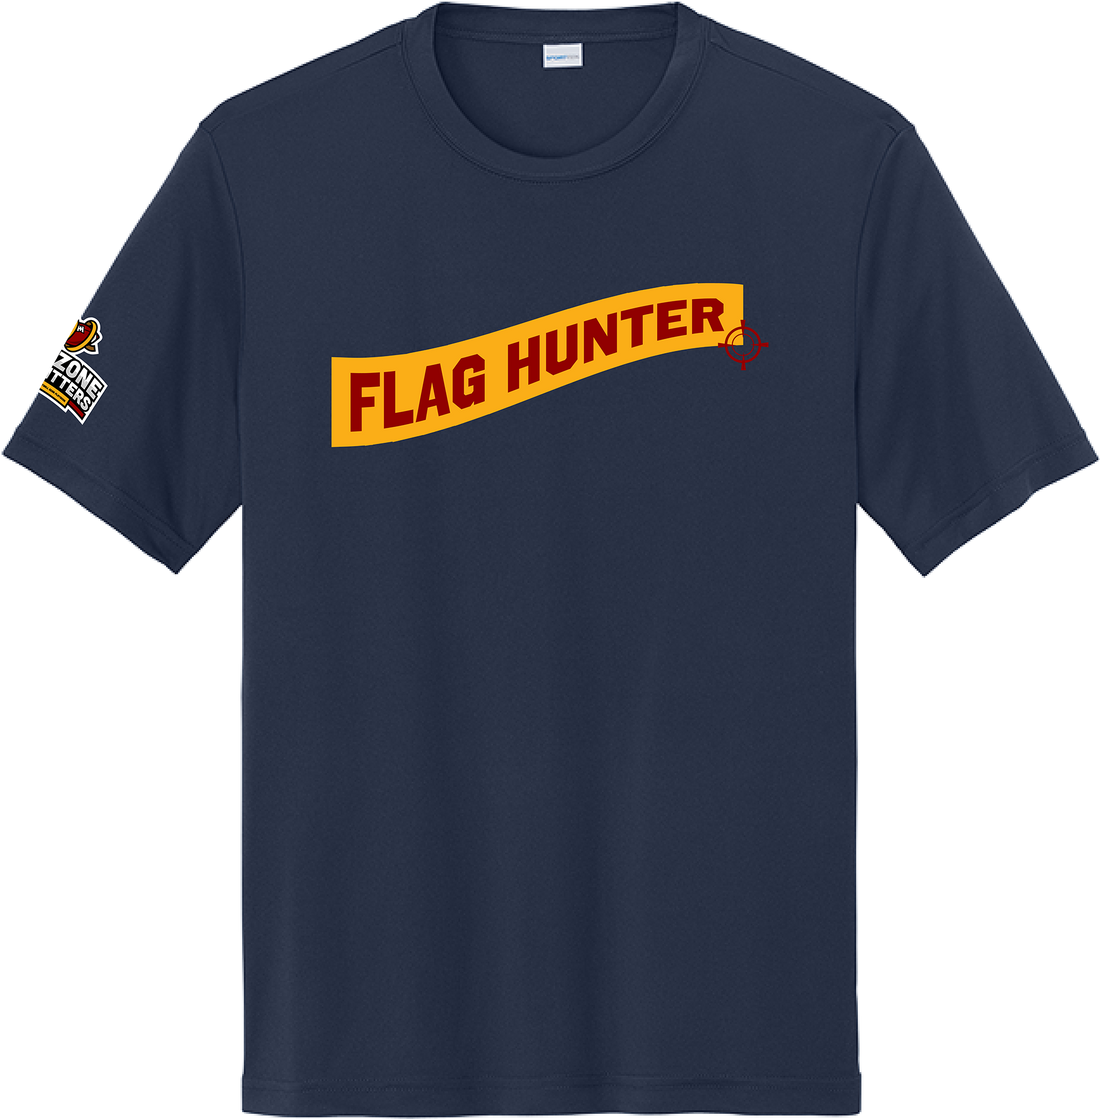 Flag Hunter - Short Sleeve Shirt